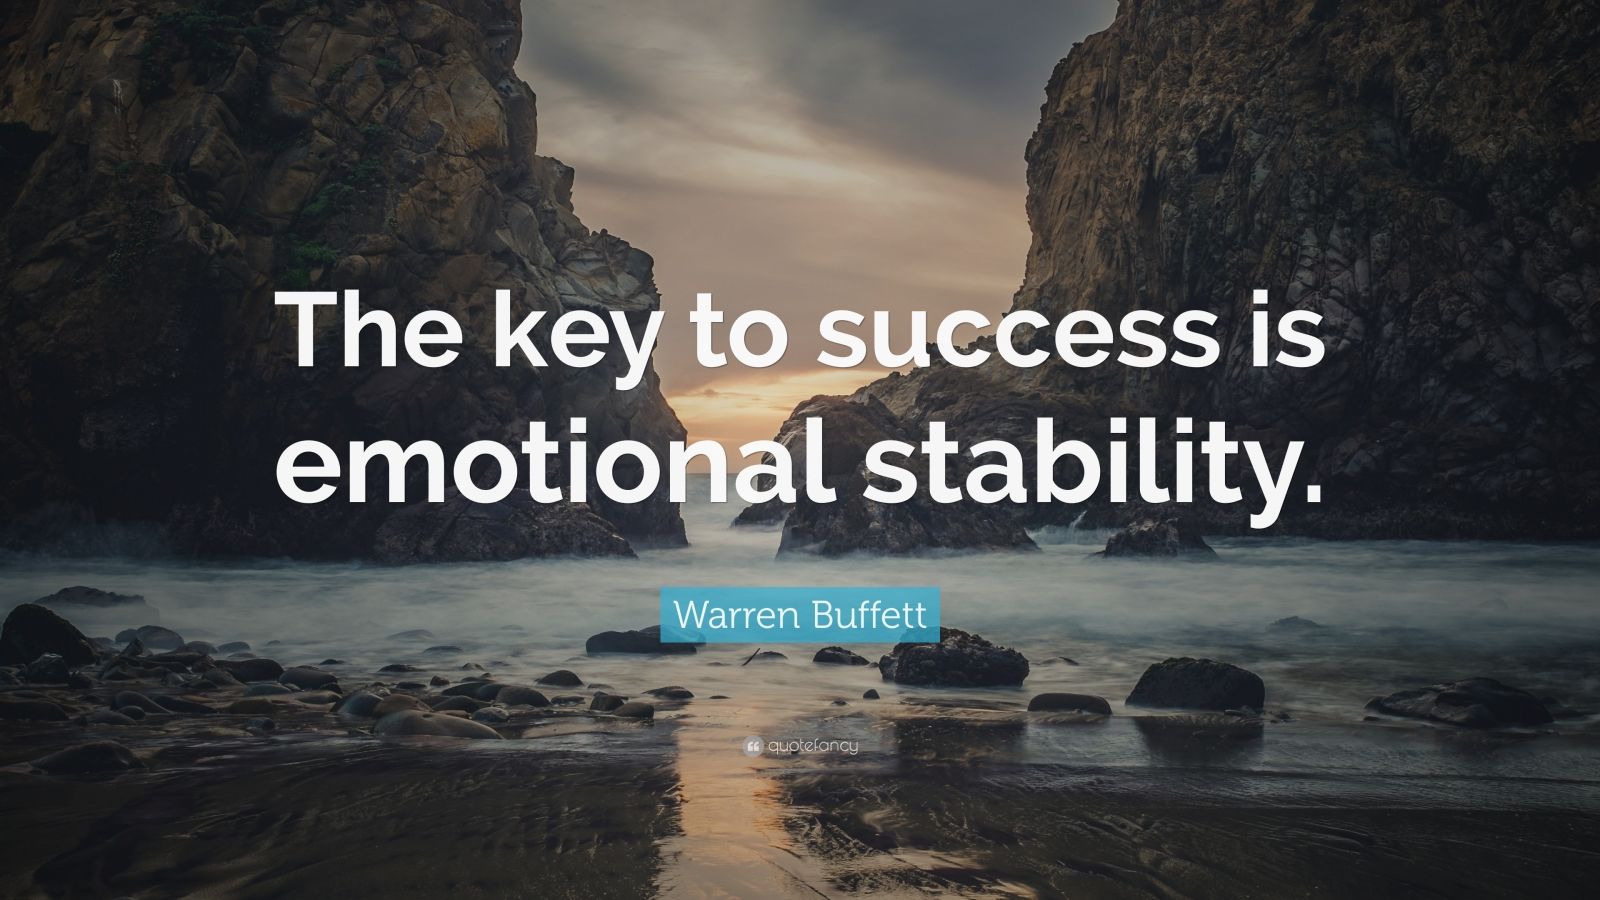 Warren Buffett Quote: "The key to success is emotional ...